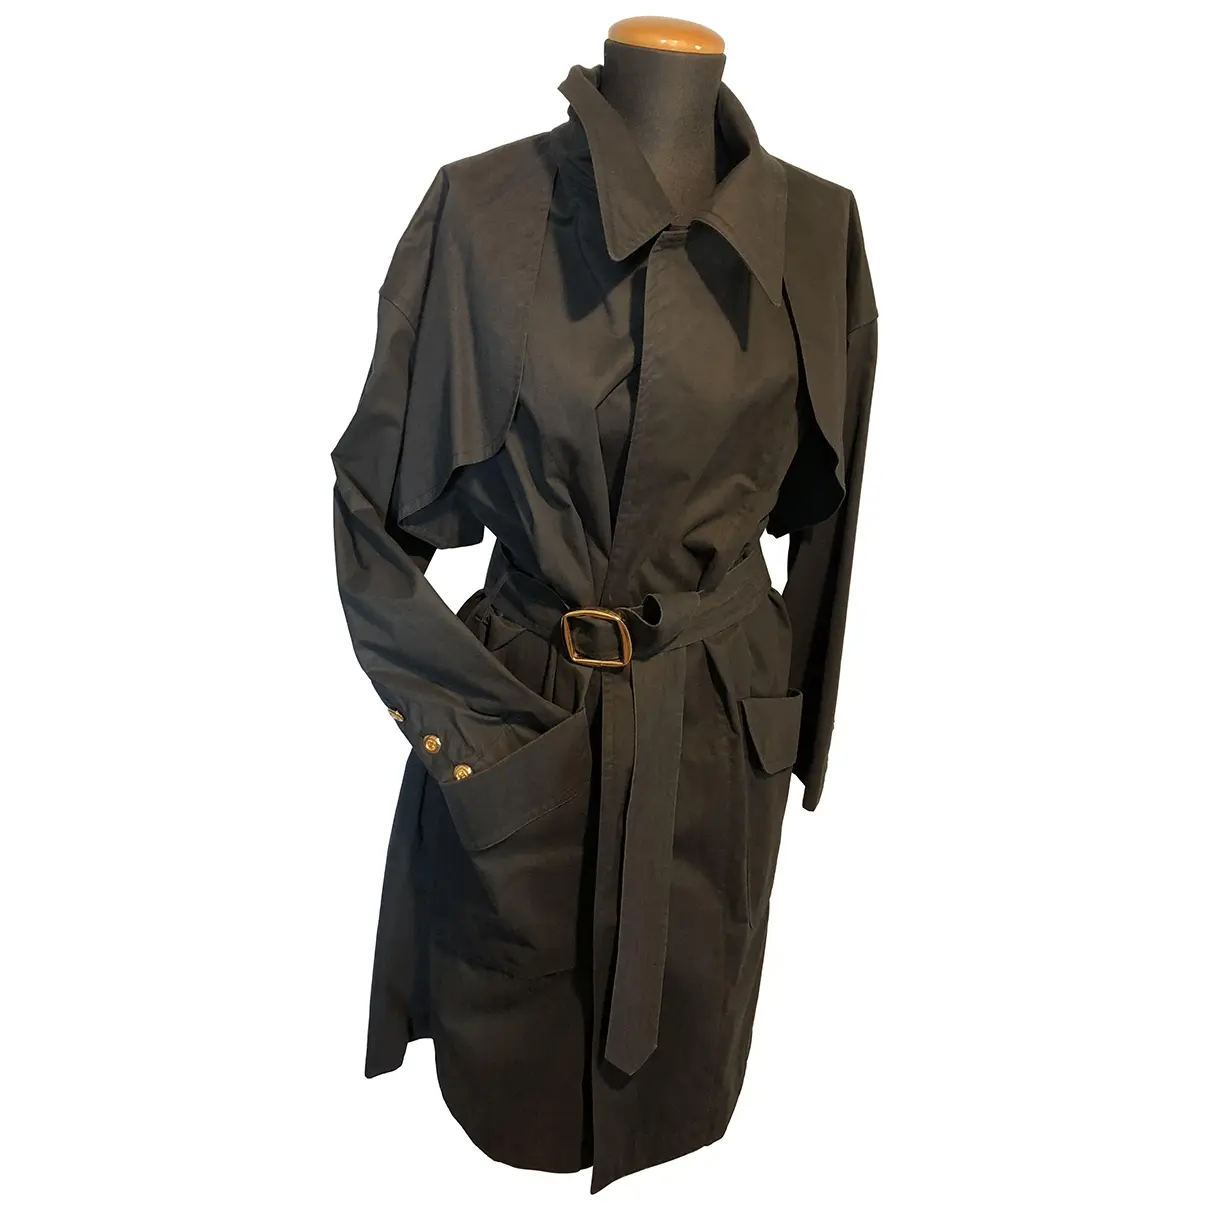 Buy Chanel Trench coat online - Vintage